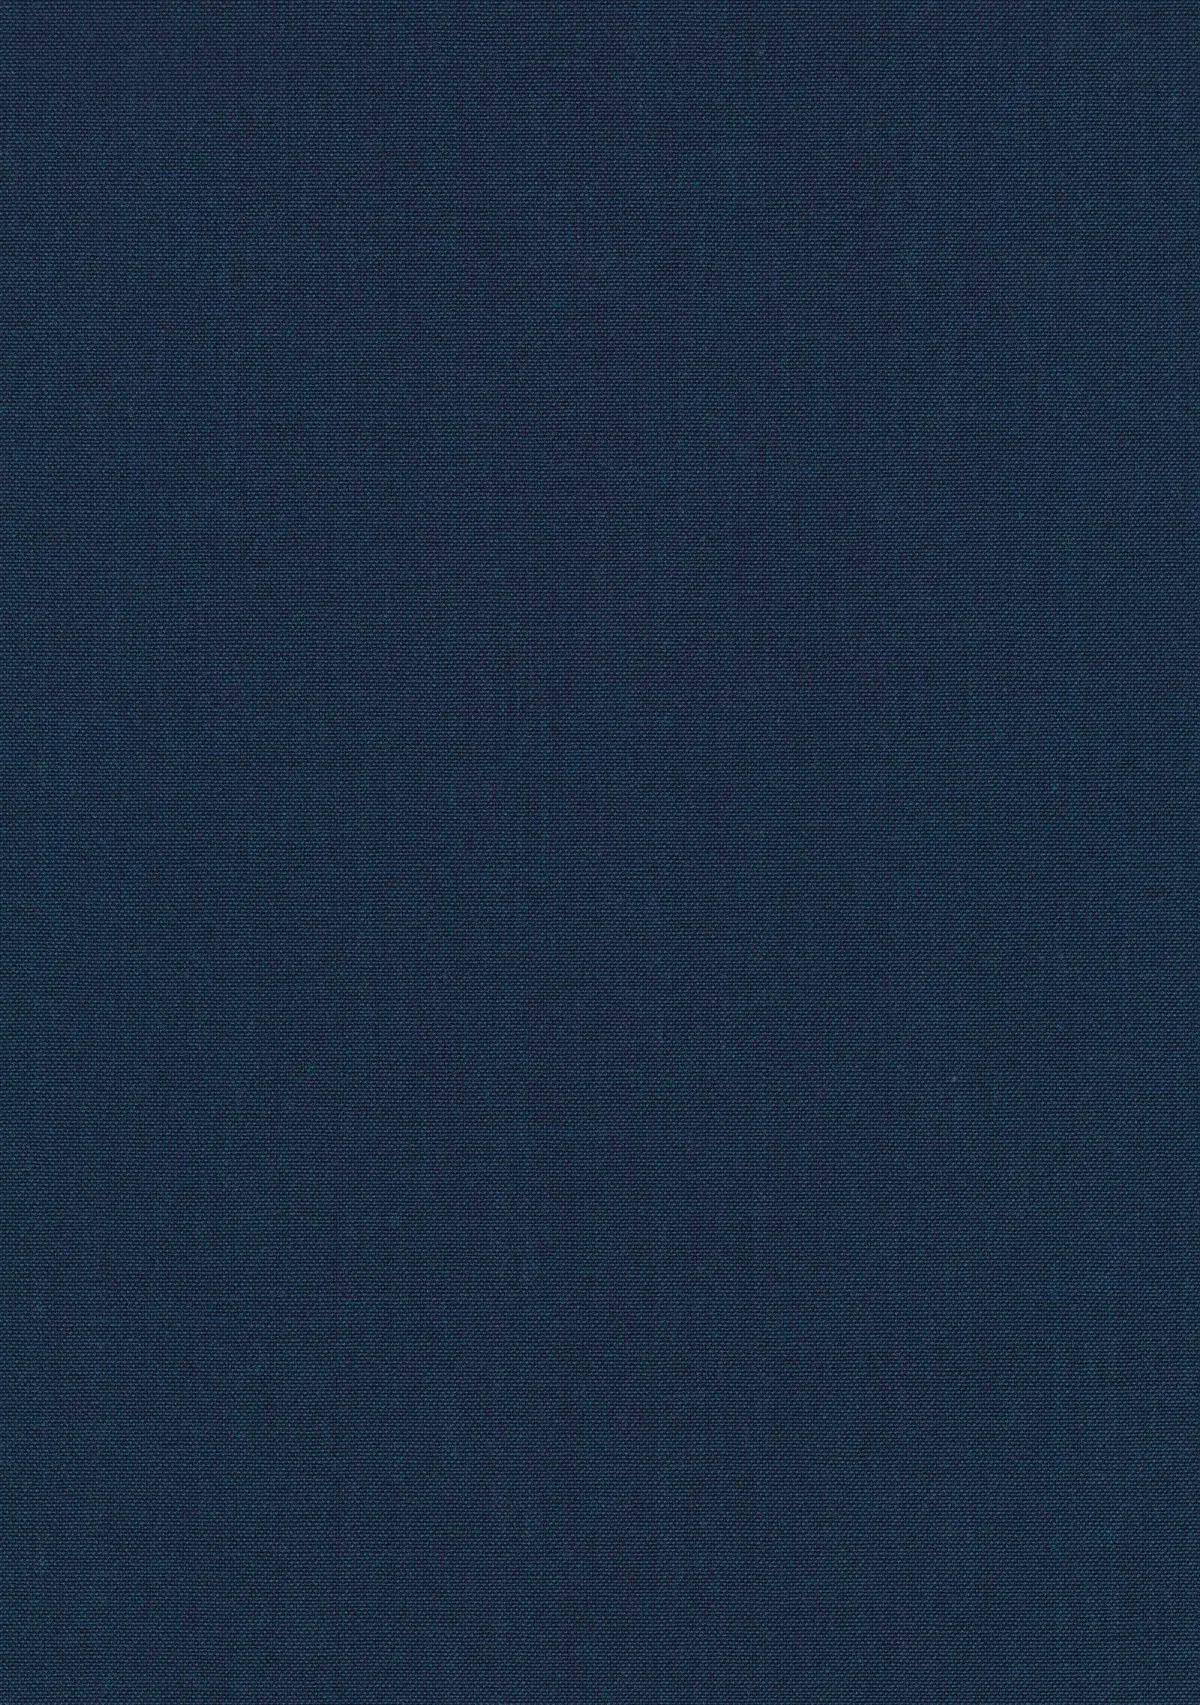 Fabric sample Remix 3 866 blue